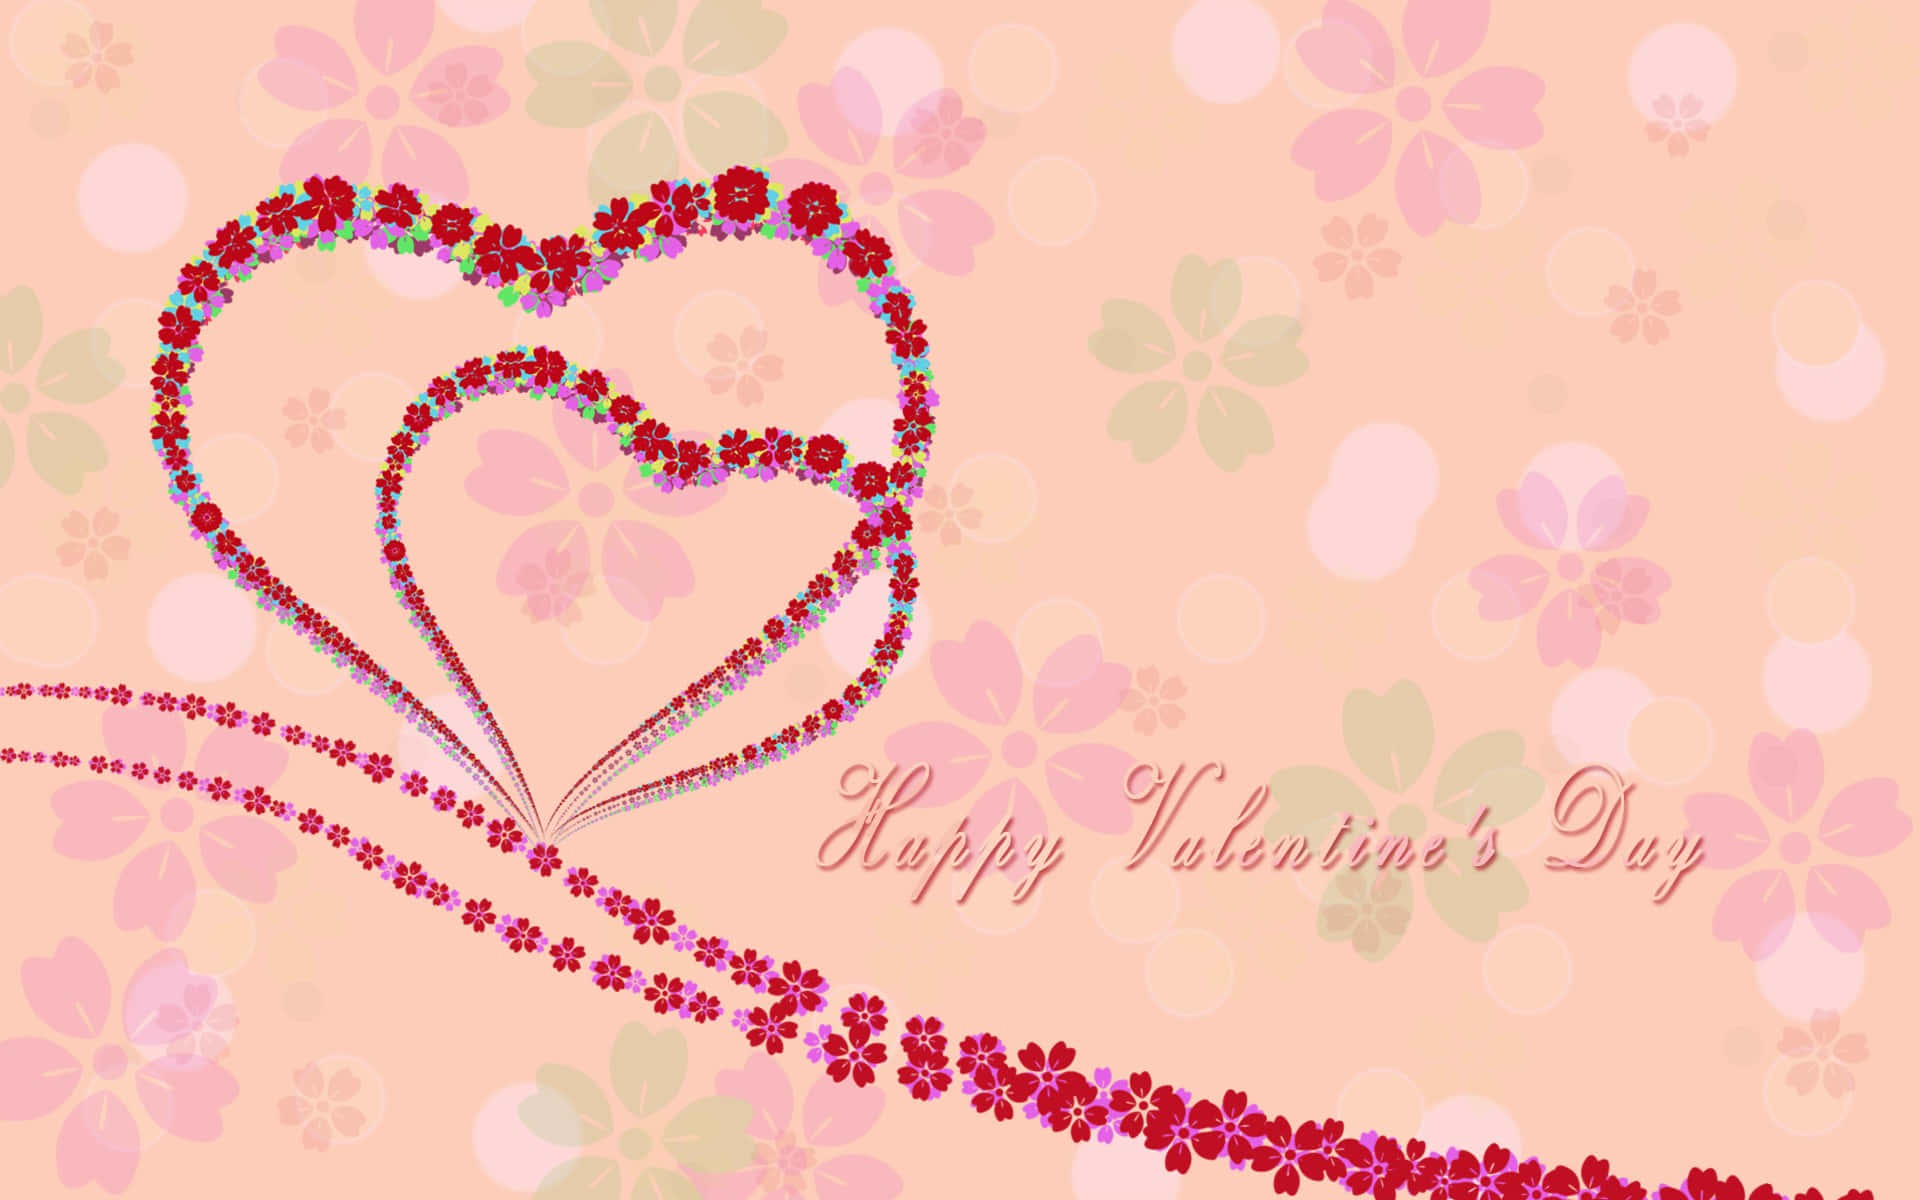 Celebrate the love on Valentine's Day!